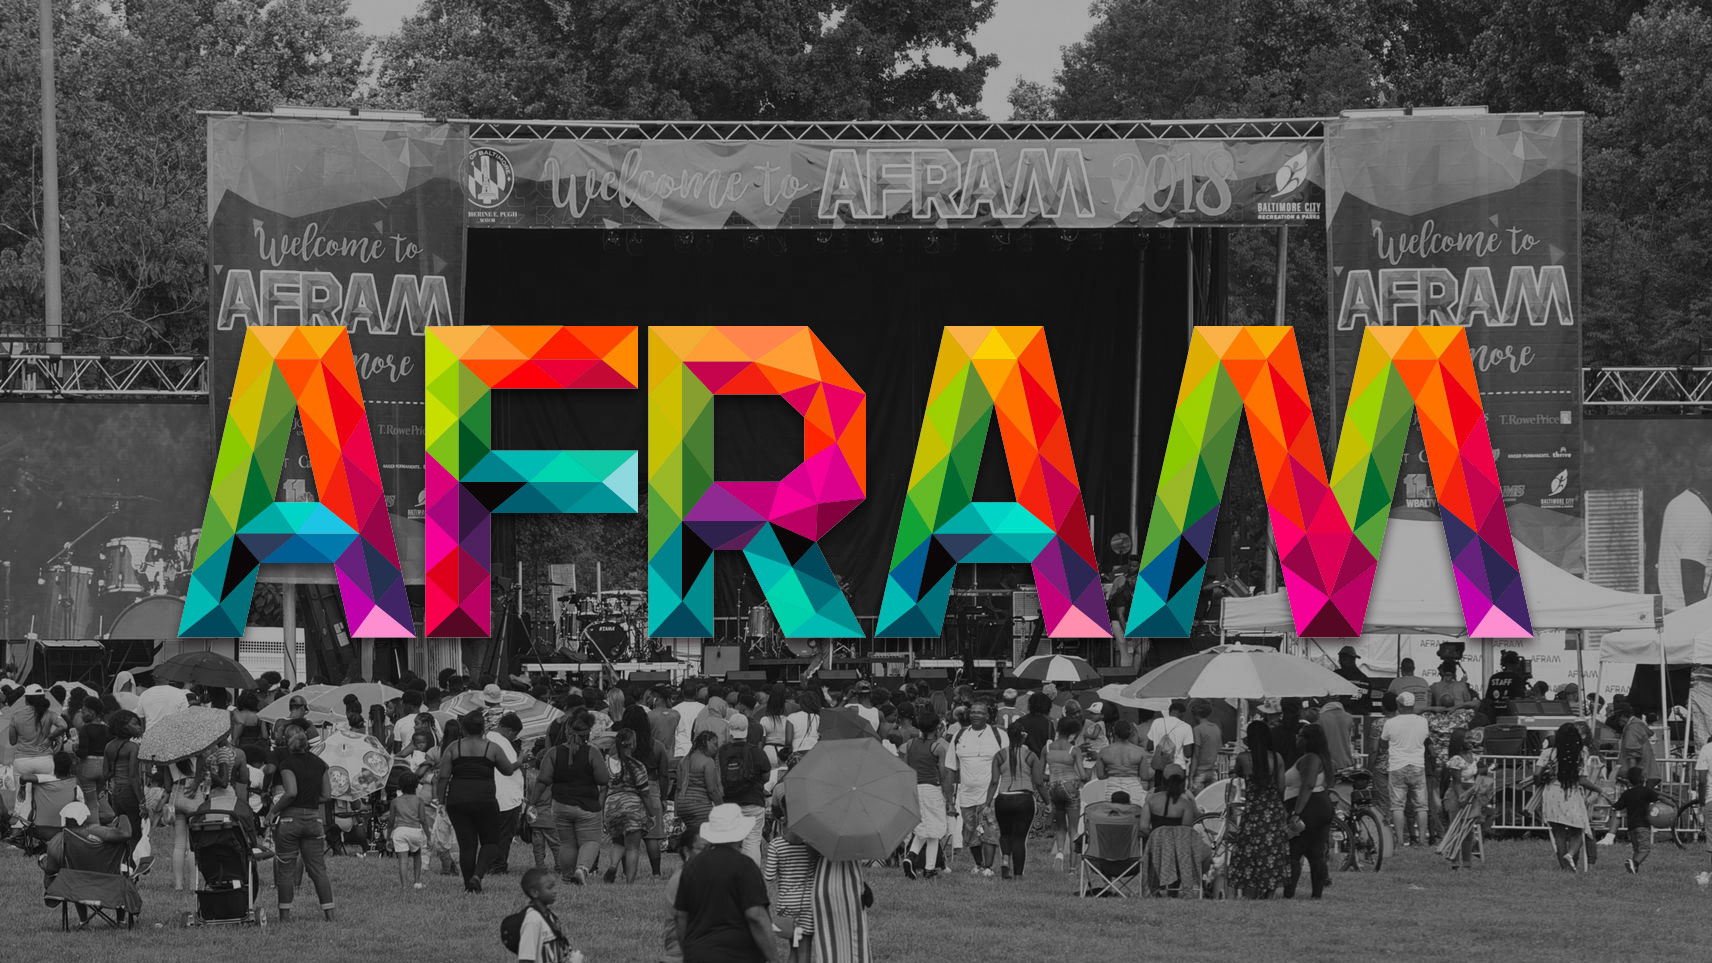 Baltimore AFRAM festival crowd with logo overlay